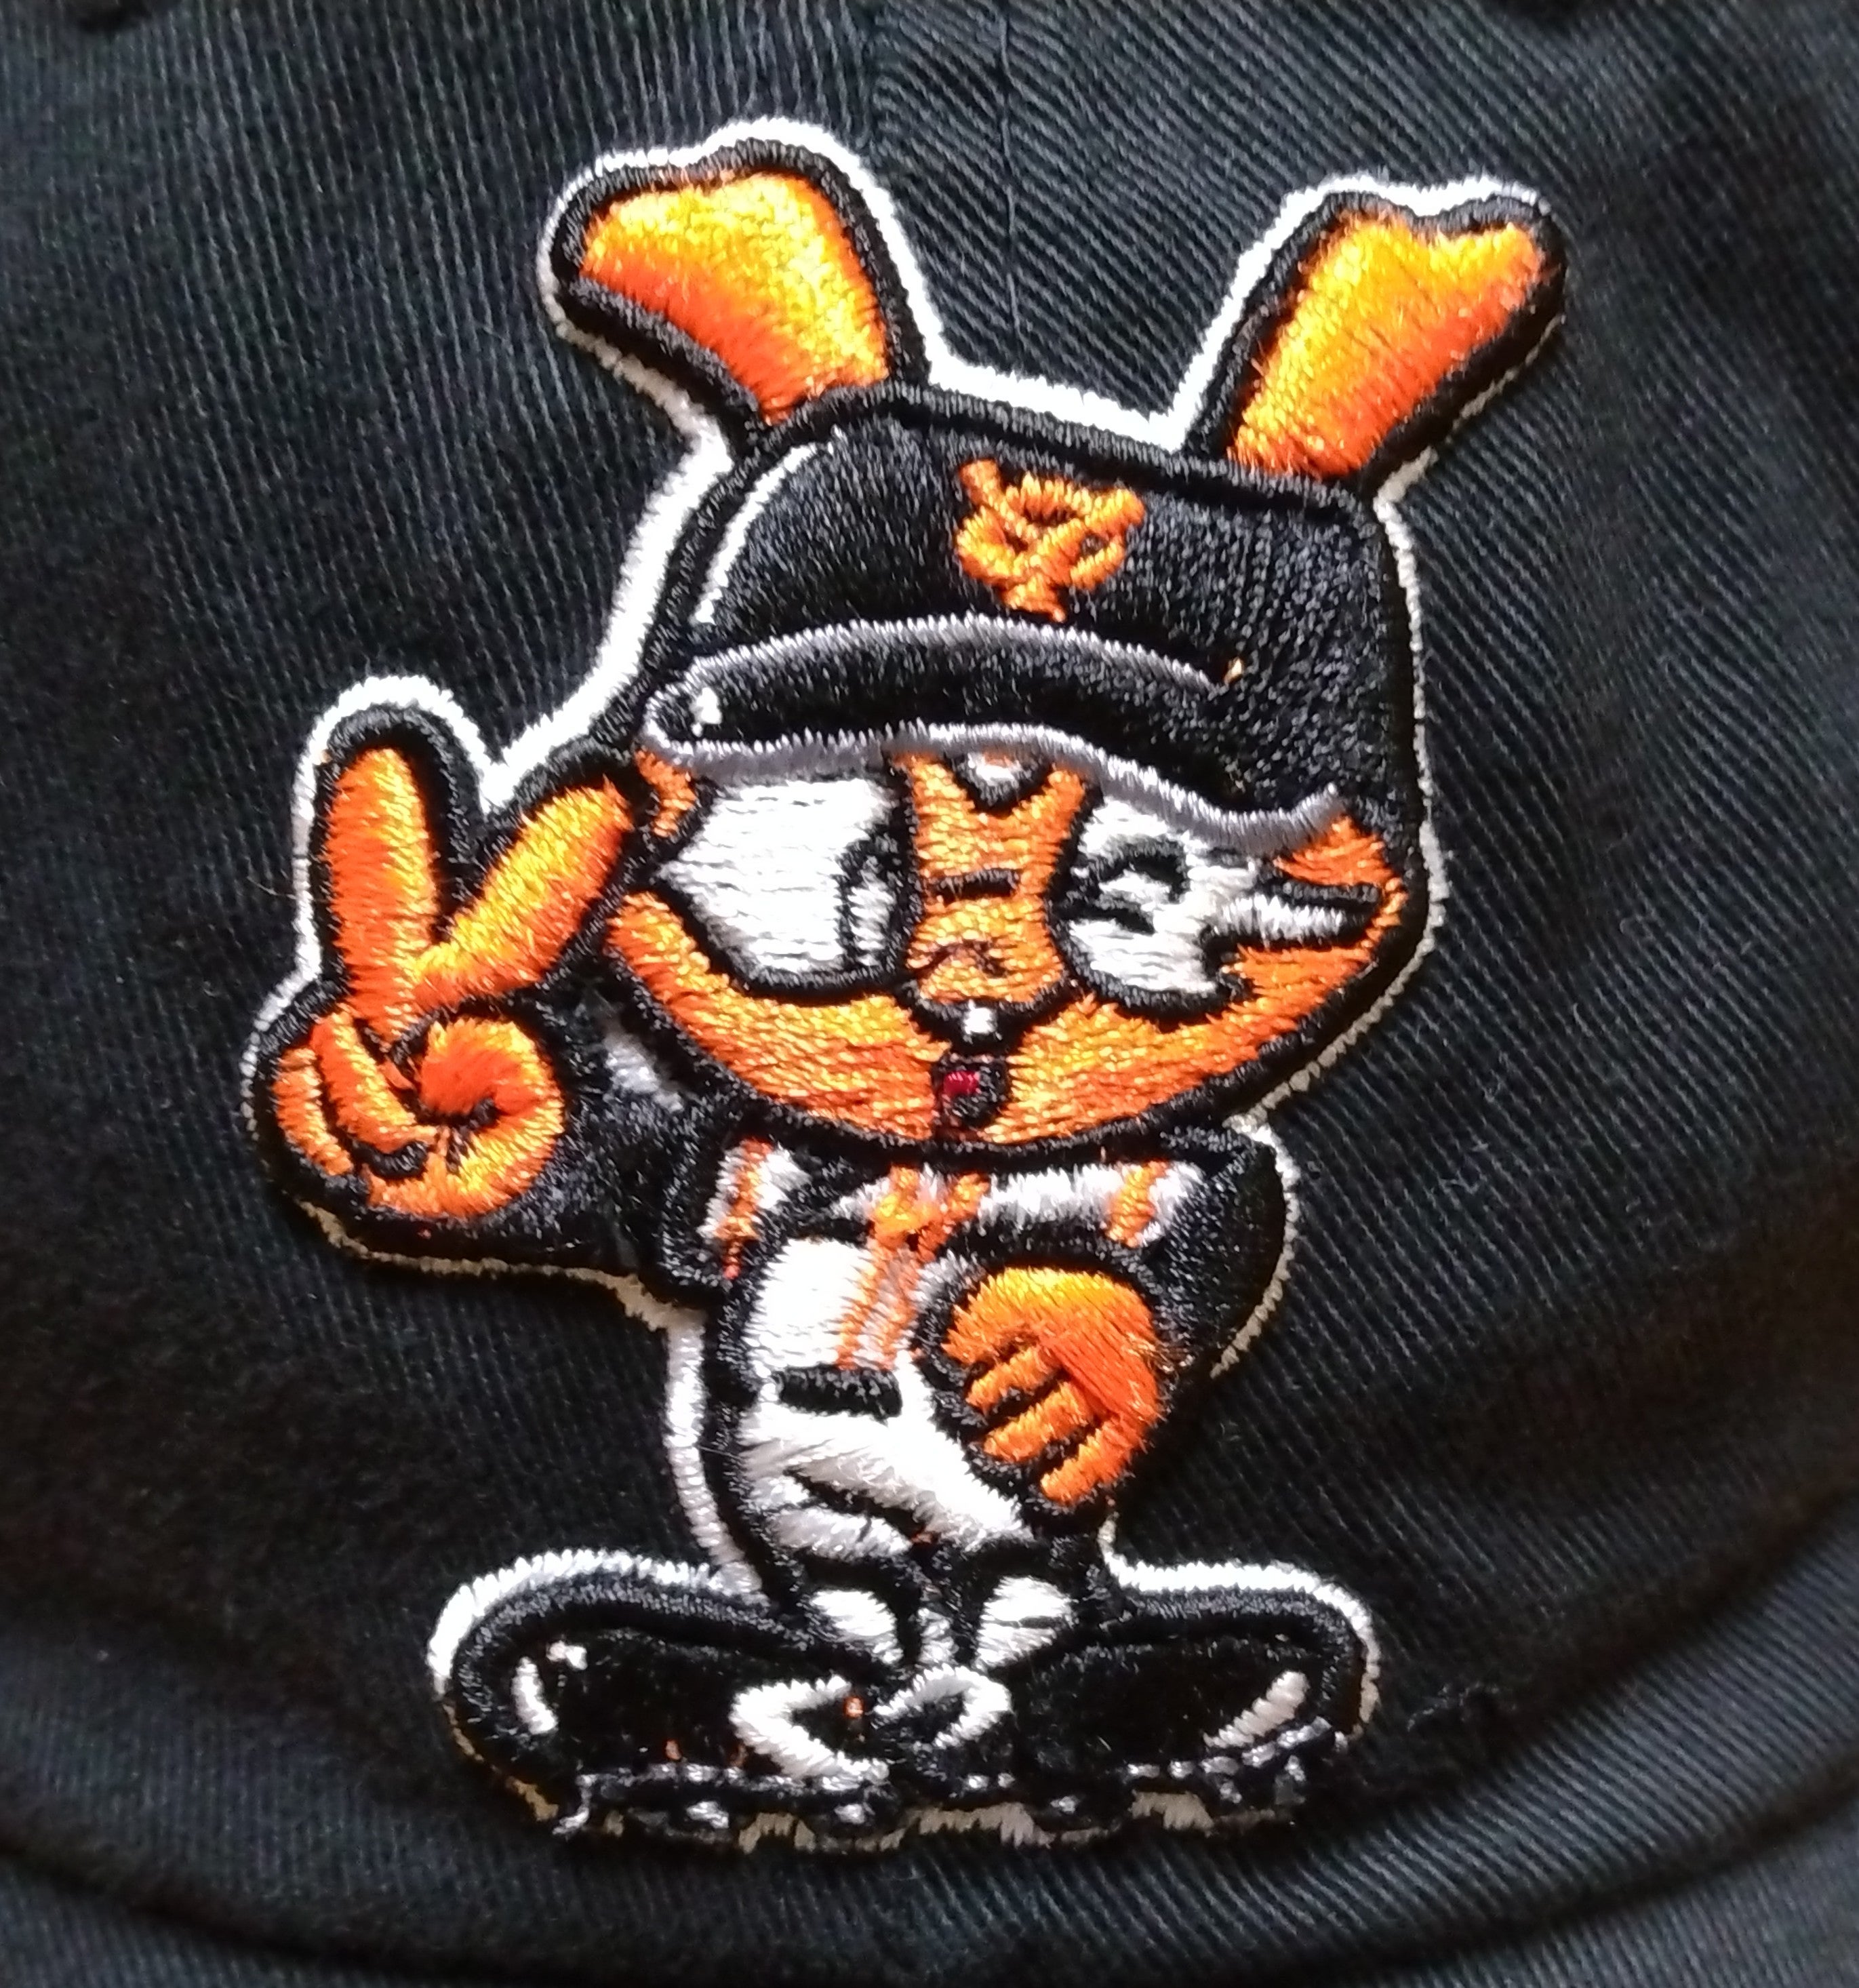 Yomiuri Giants Ballpark Slouch Cap by American Needle